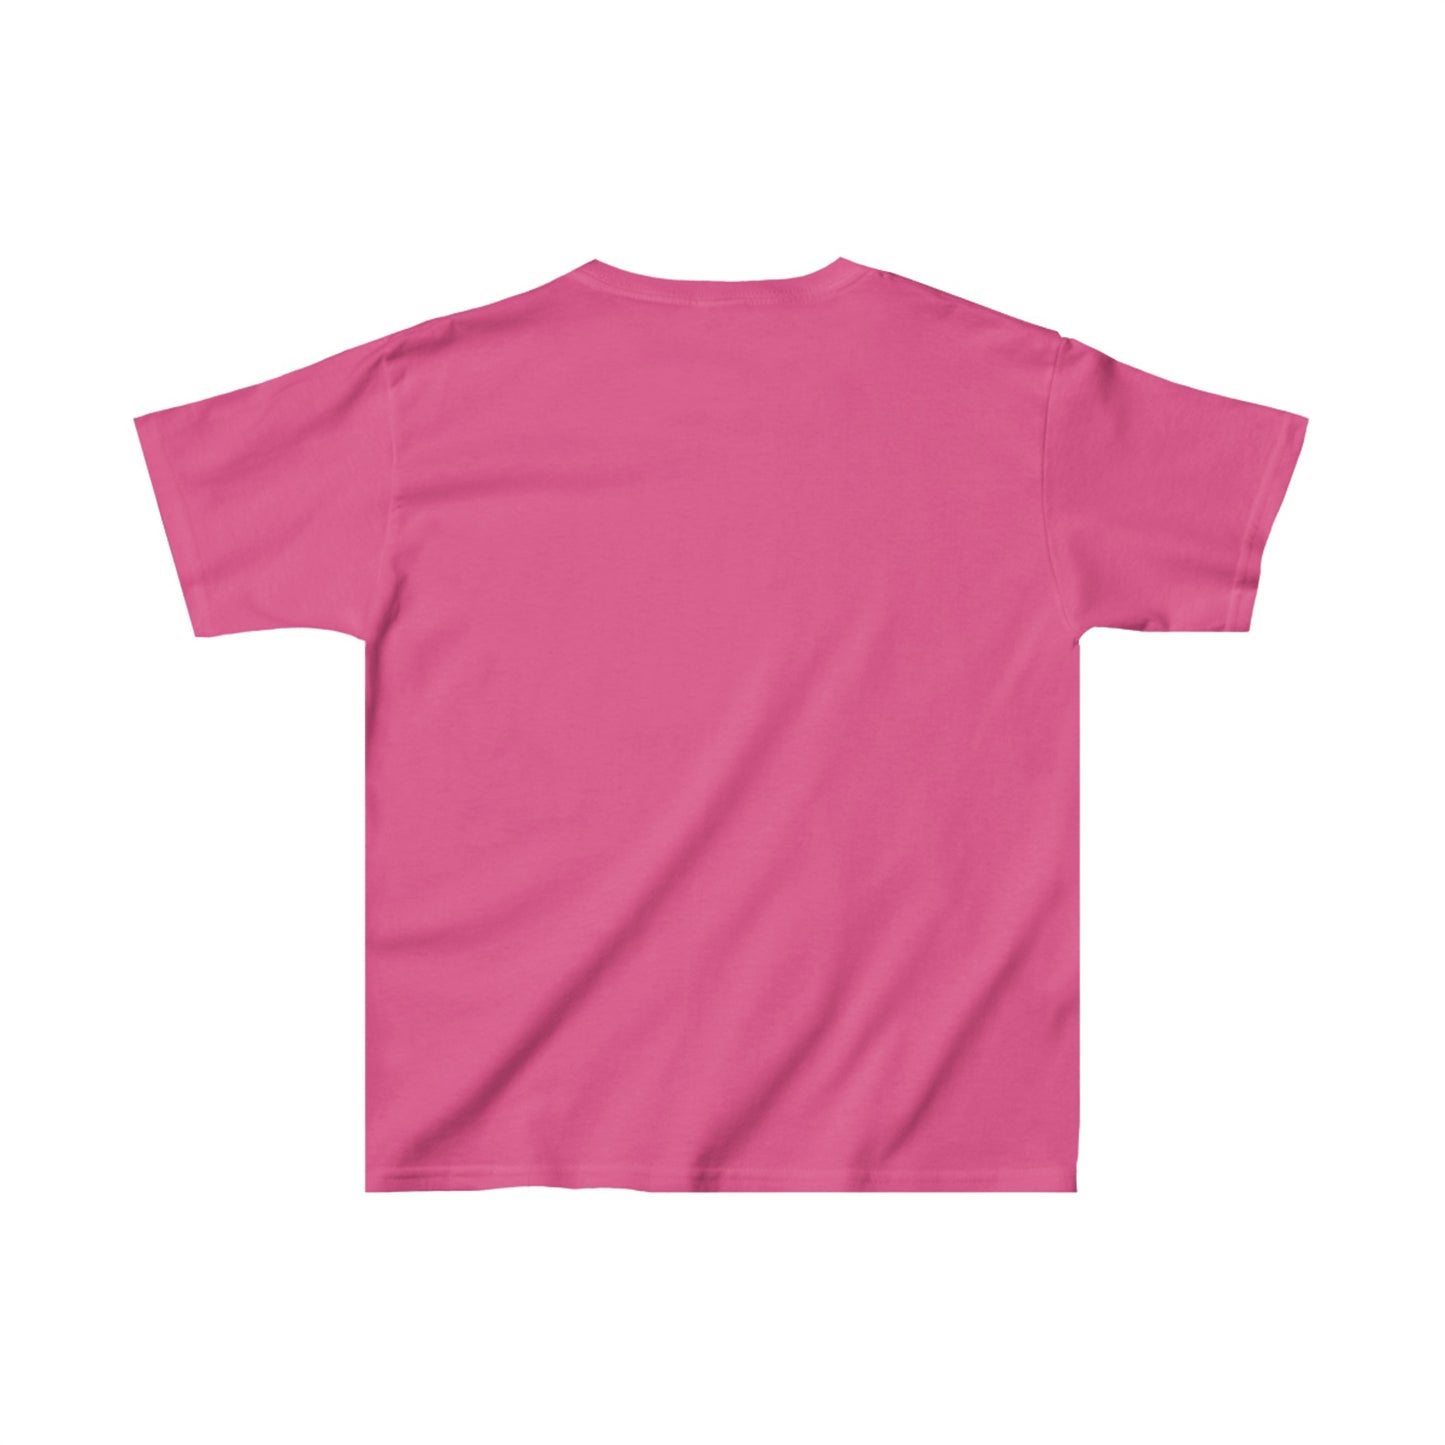 Kids Heavy Cotton Graphic design (On Three) T-shirt